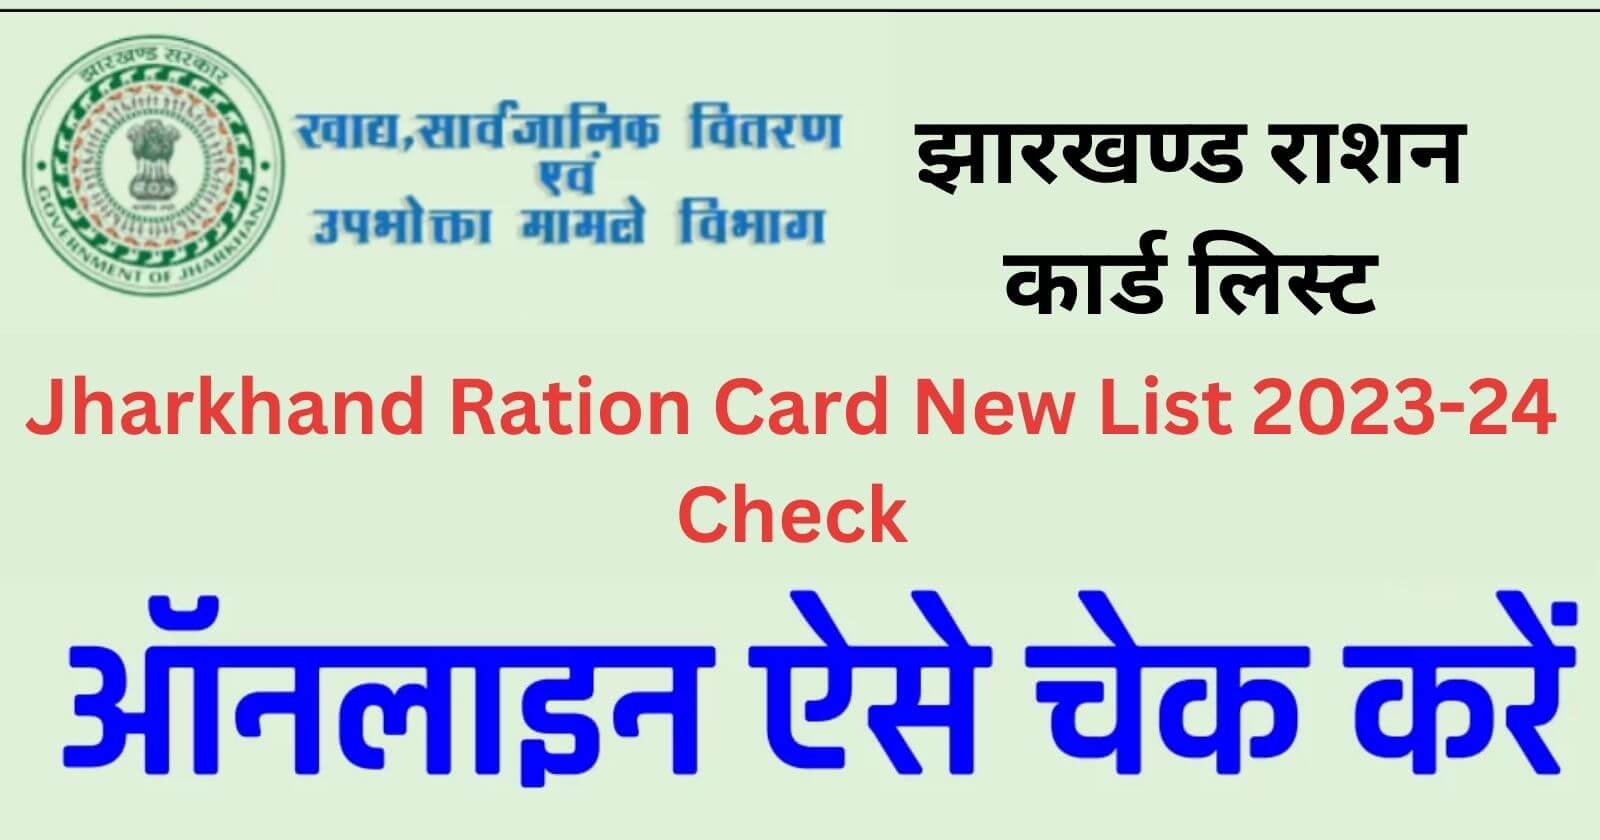 Jharkhand Ration Card New List 2023-24 Check